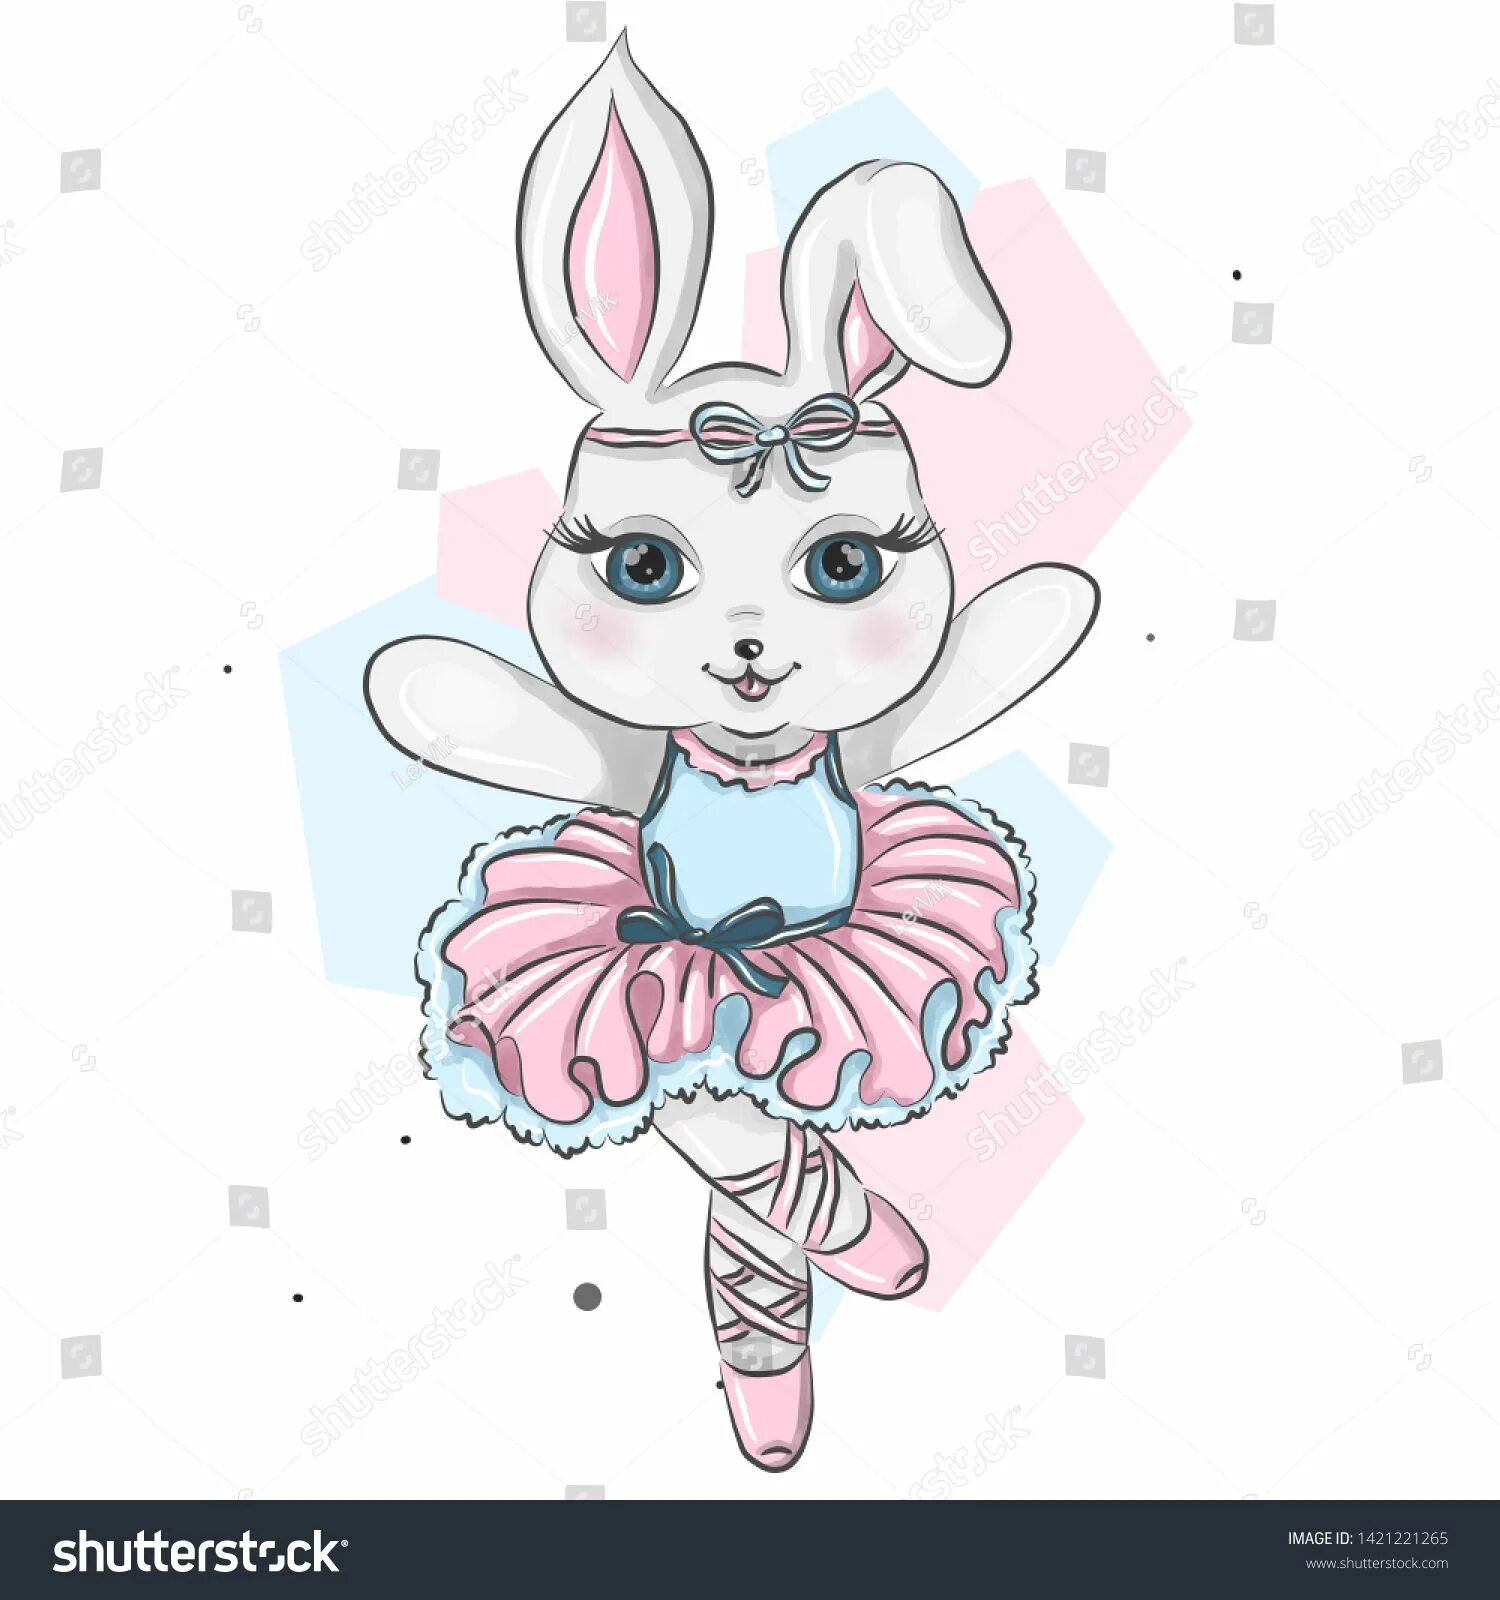 Coloring page deft ballerina rabbit